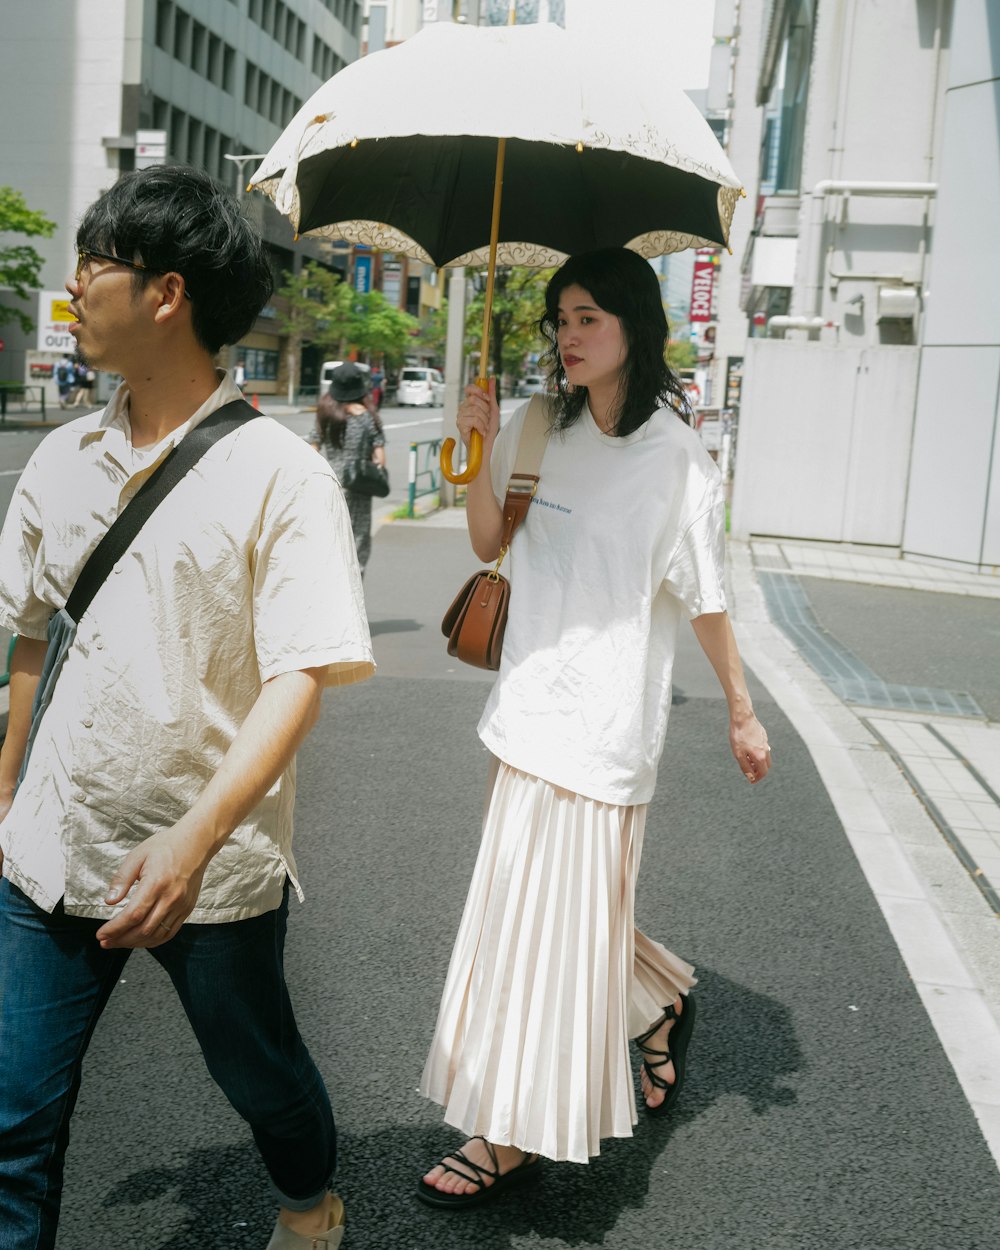 a man and a woman walking down a street under an umbrella